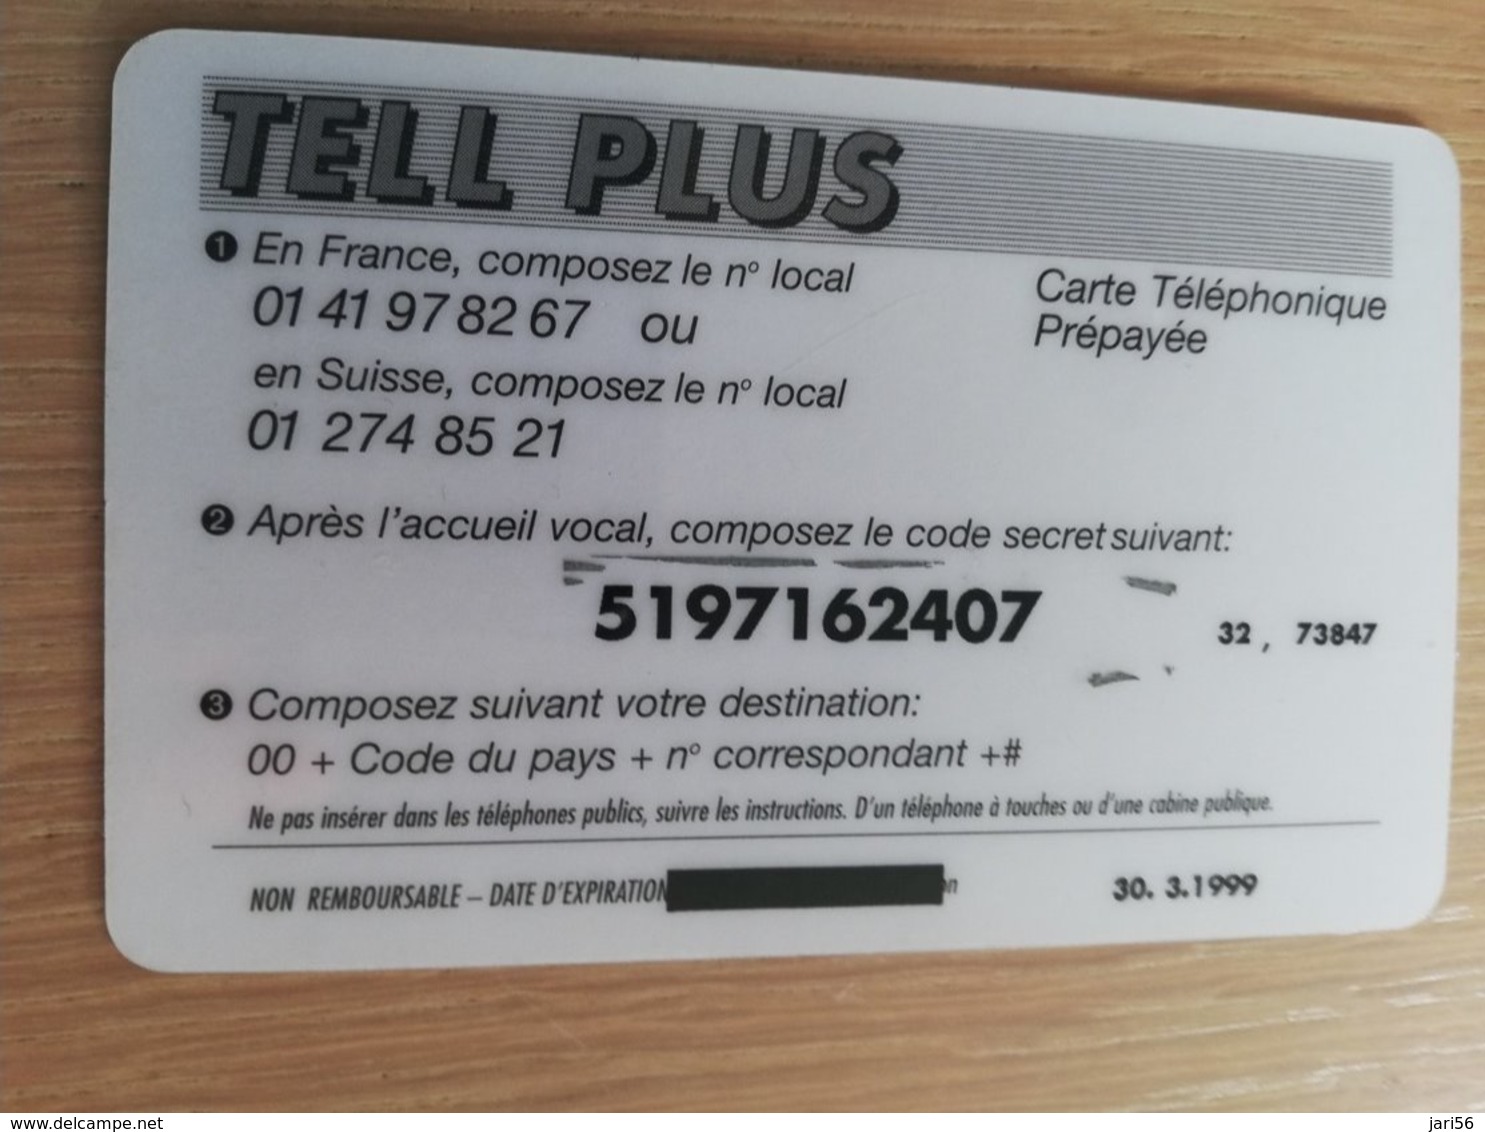 FRANCE/FRANKRIJK  TELPLUS 150 UNITES PREPAID  USED    ** 1505** - Nachladekarten (Handy/SIM)